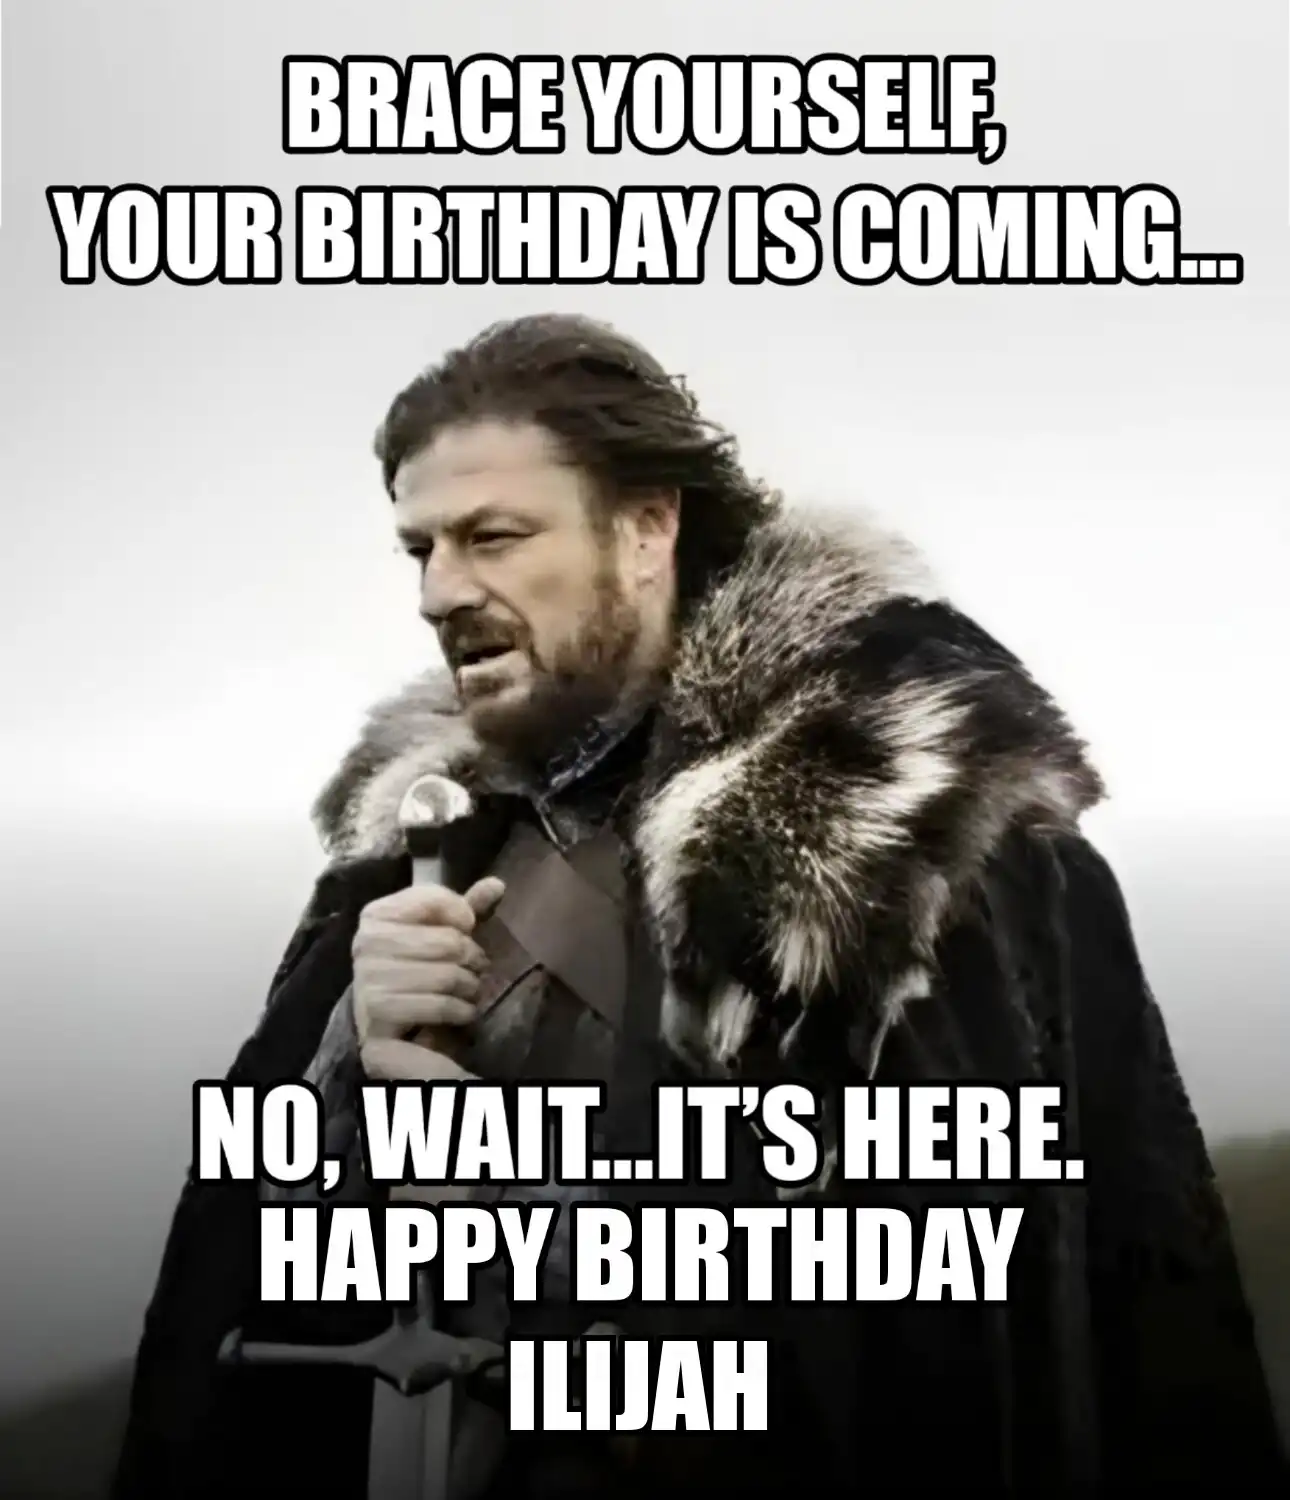 Happy Birthday Ilijah Brace Yourself Your Birthday Is Coming Meme